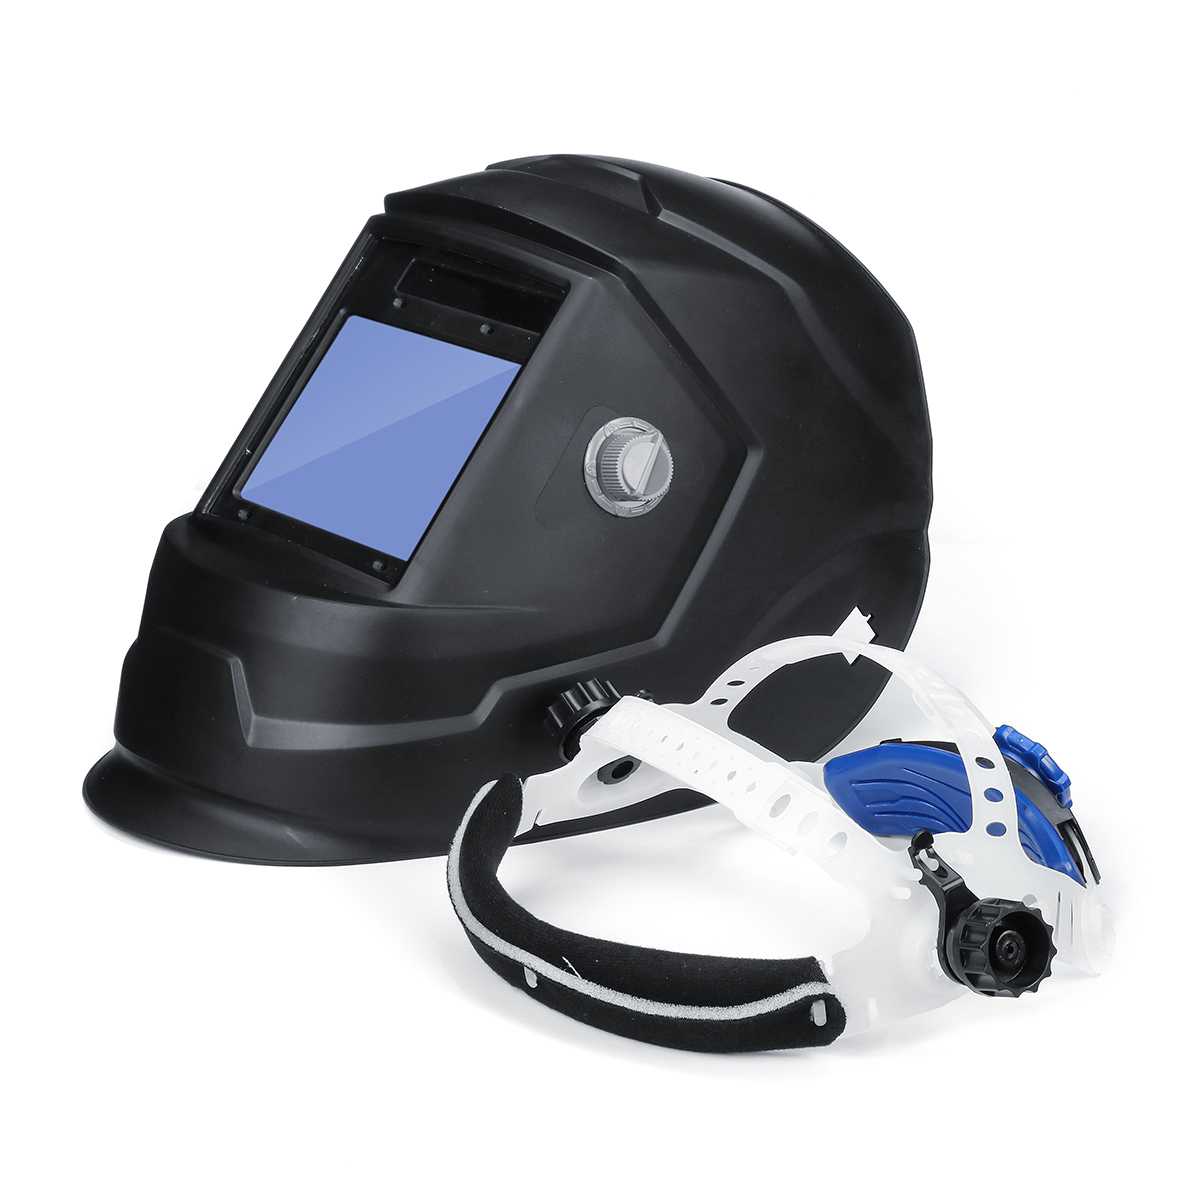 

Solar Power Auto Darkening Welding Helmet Mask For Arc Mig Tig Welding Big View Area